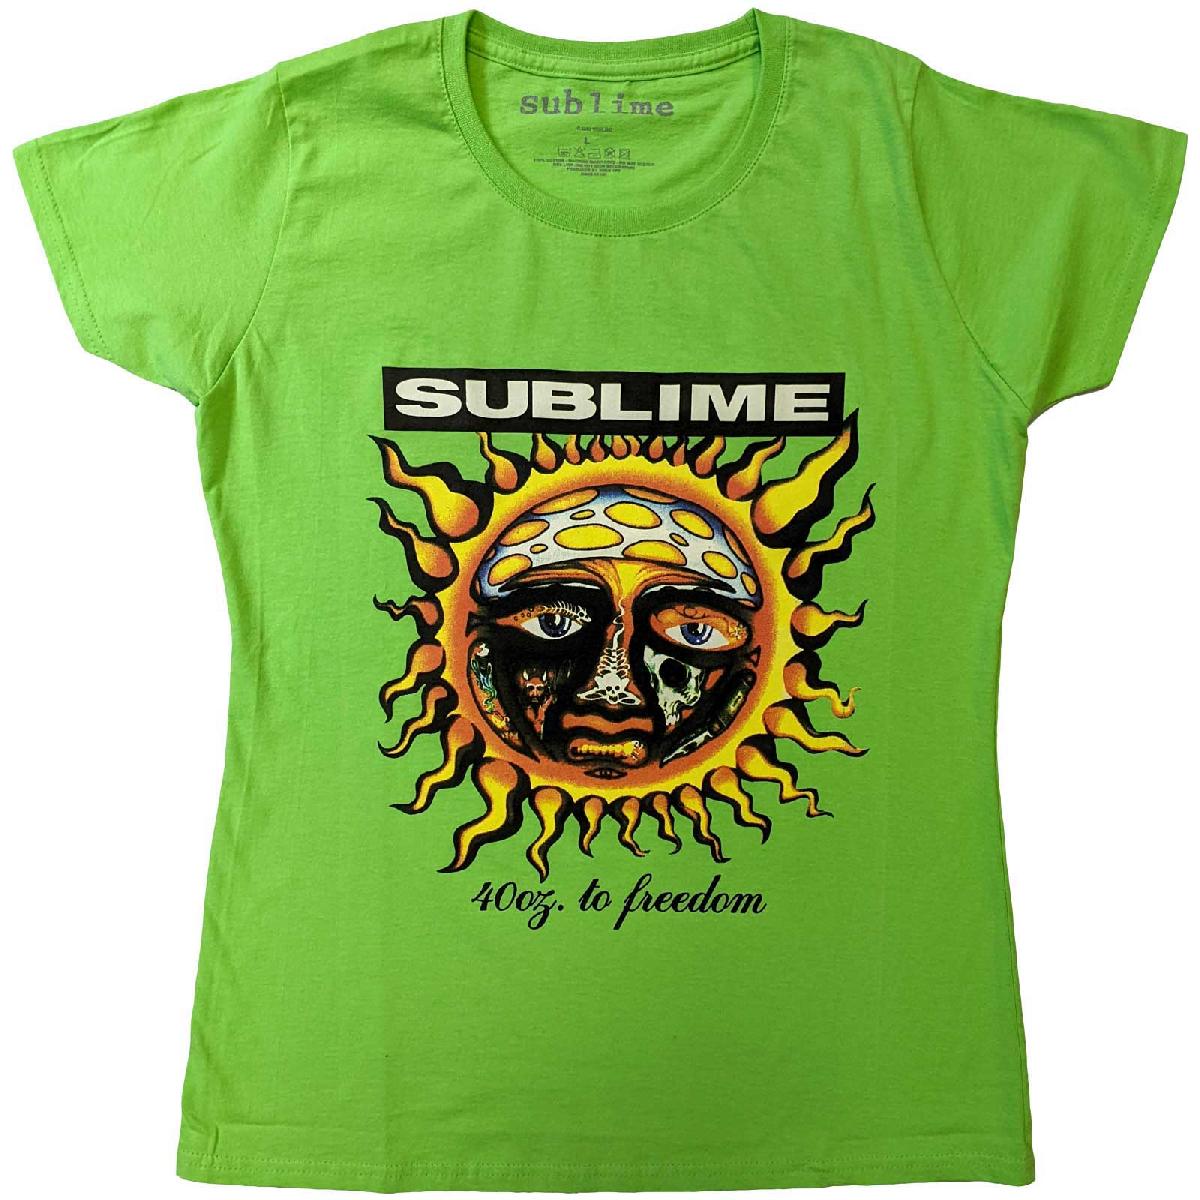 Sublime Ladies T-Shirt: 40oz To Freedom